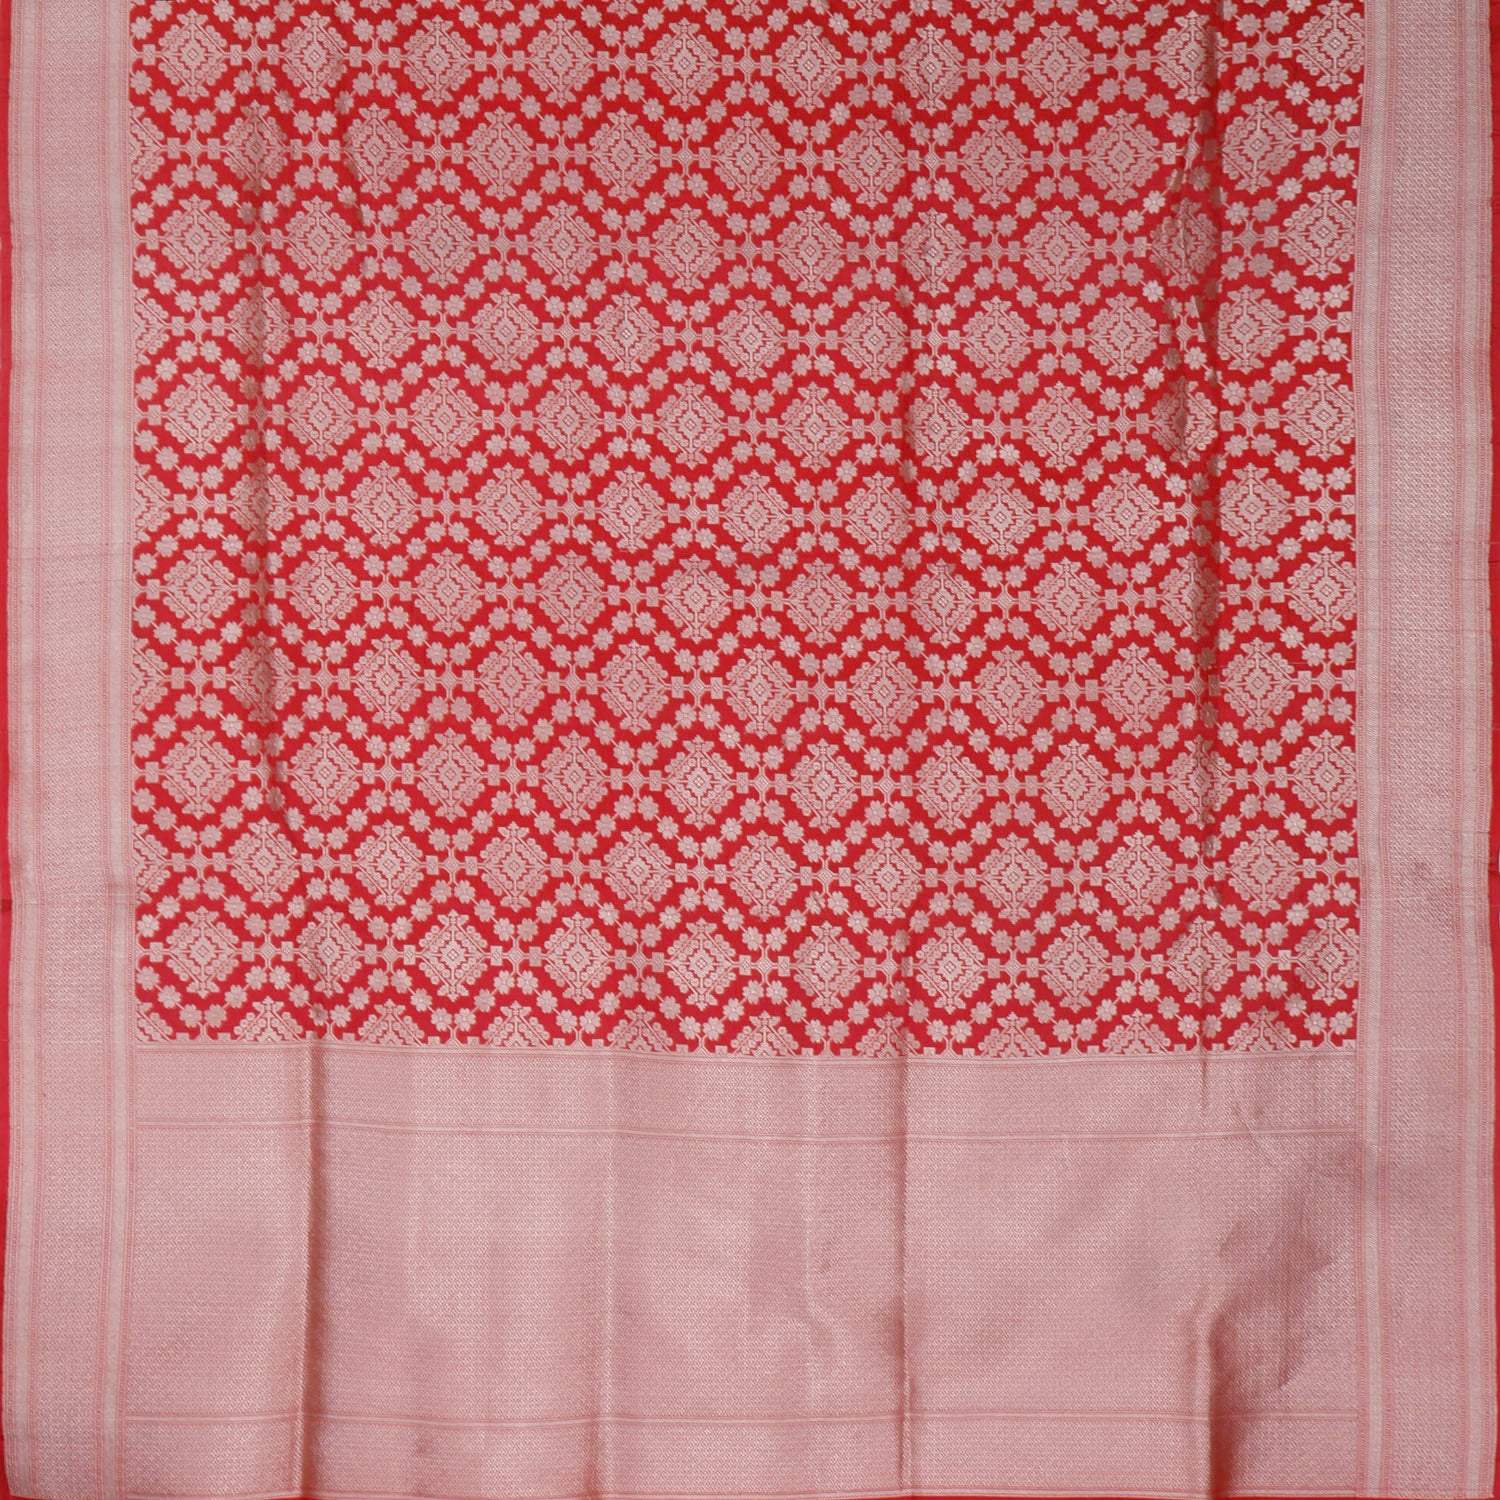 Red Banarasi Silk Saree With Floral Pattern - Singhania's